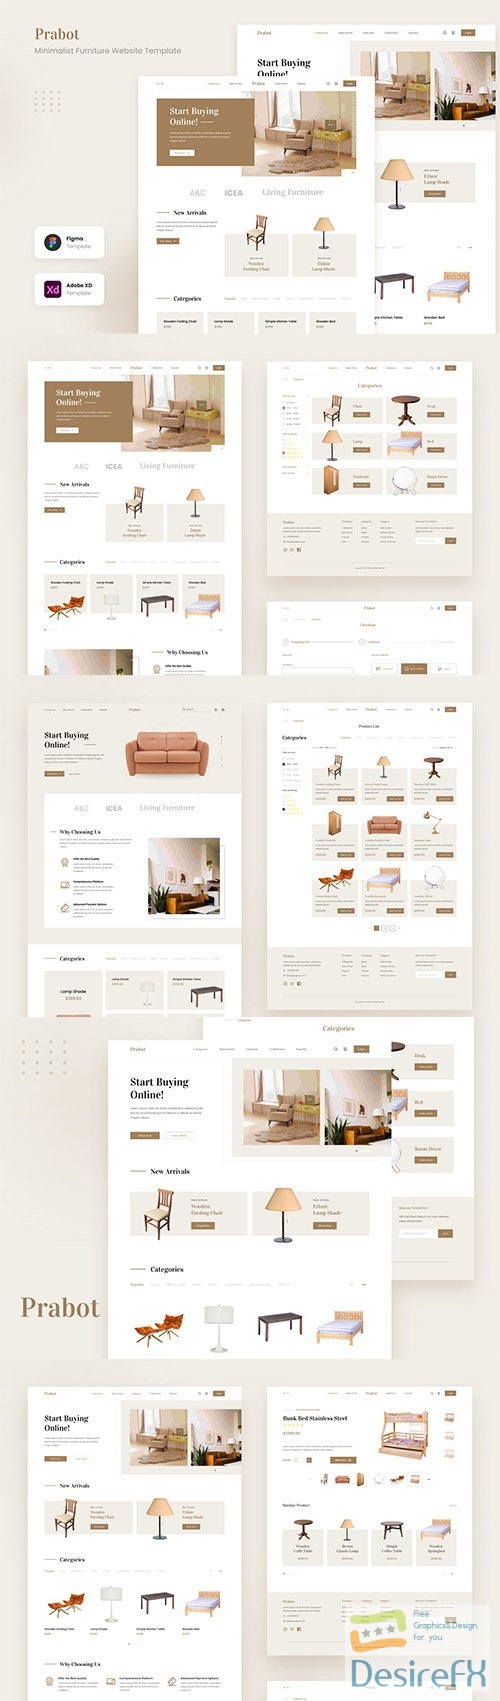 Prabot - Minimalist Furniture Website UI Template